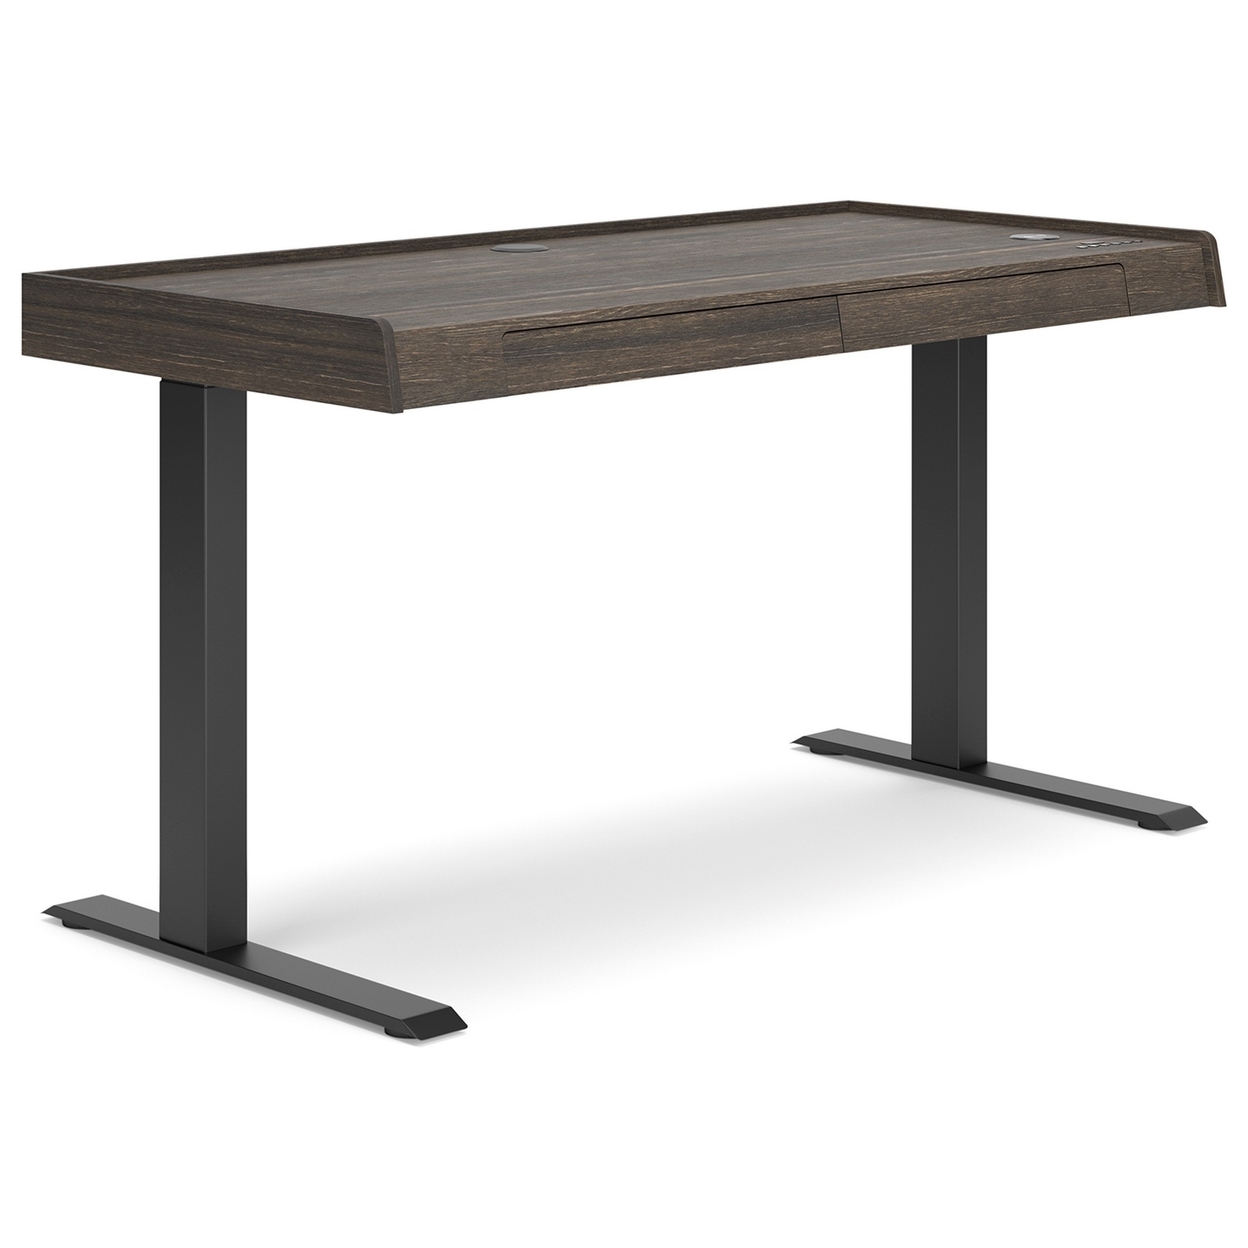 55 Inch Desk, Power Adjustable Height, USB Ports, Wood Grain, Dark Brown - Saltoro Sherpi